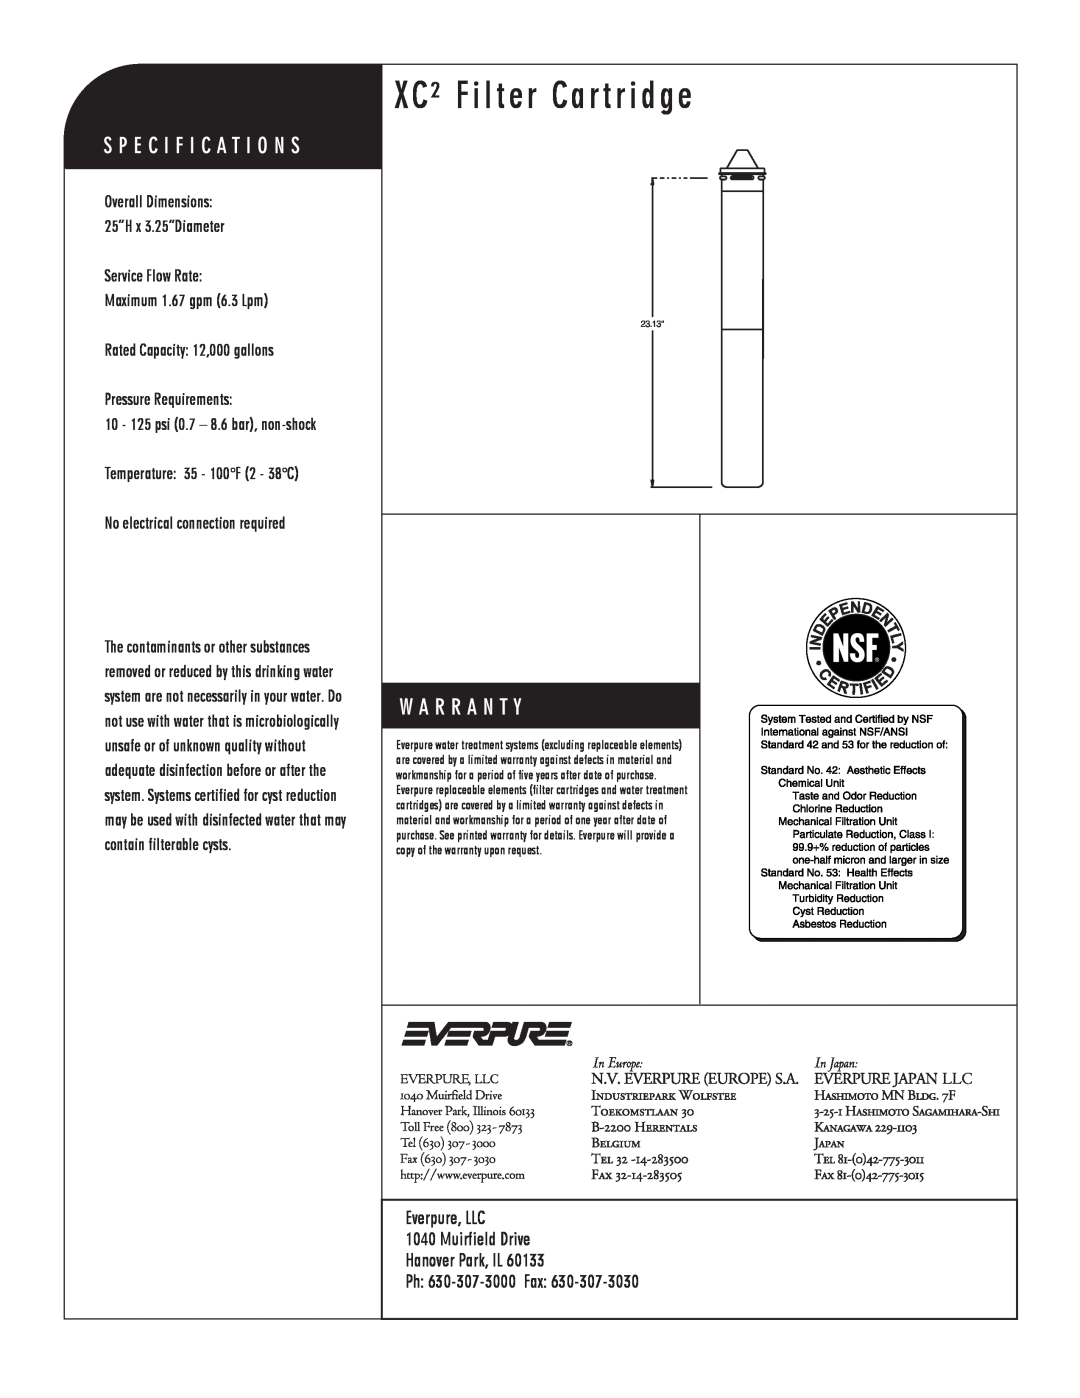 Everpure EV9613-10 manual XC² Filter Cartridge, XC² Replacement Cartridge, Service Flow Rate Maximum 1.67 gpm 6.3 Lpm 